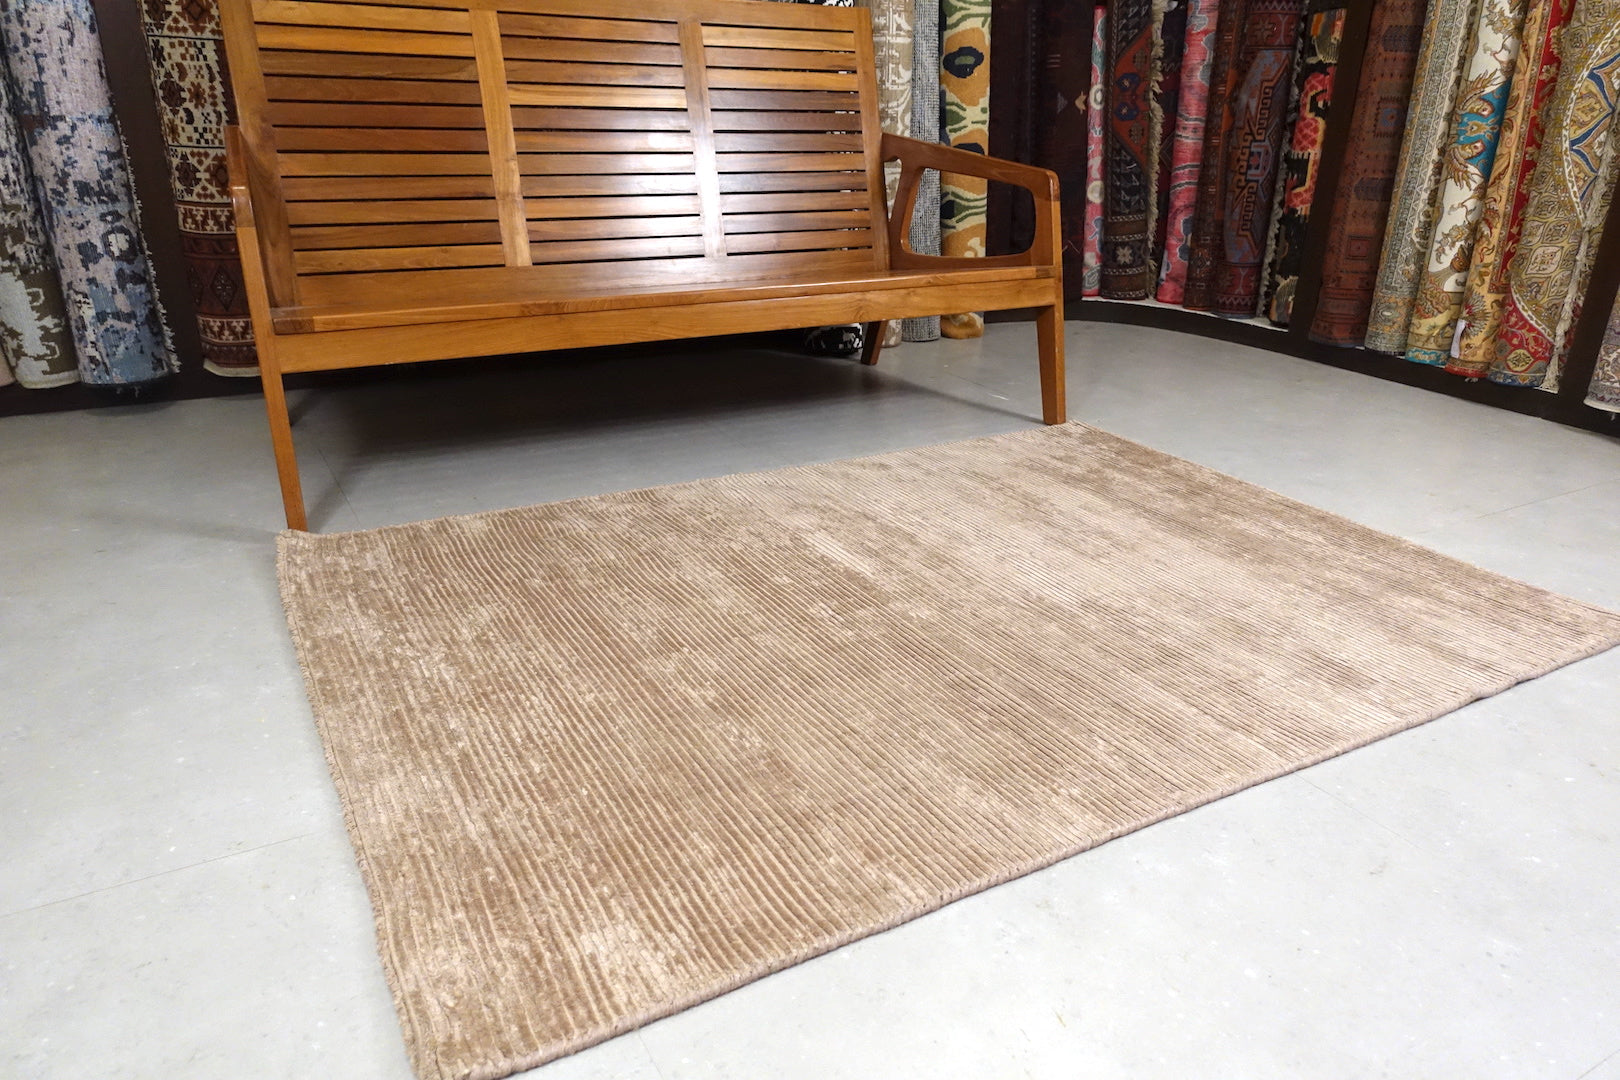 A 4 feet by 6 feet rug in brown.